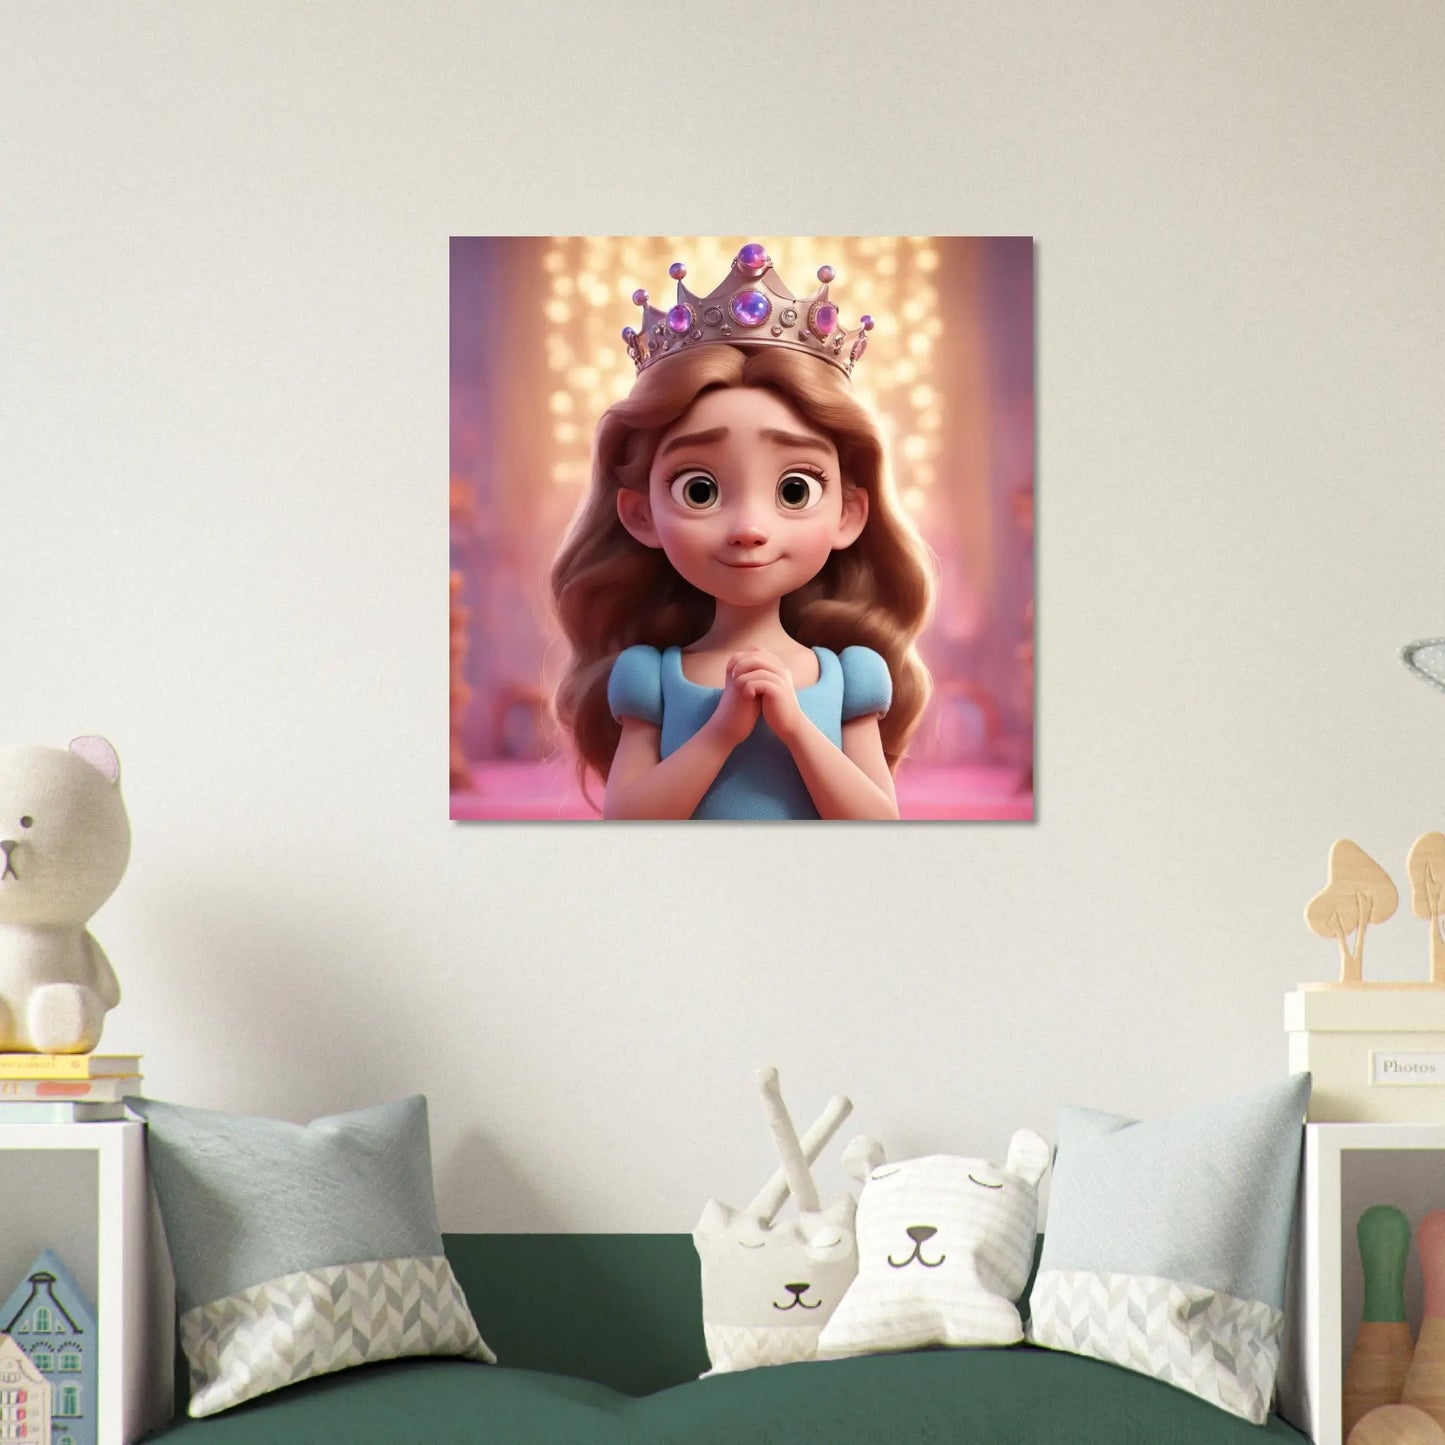 Aluminiumdruck - Prinzessin - Kinderbild, 3D-Stil, KI-Kunst RolConArt